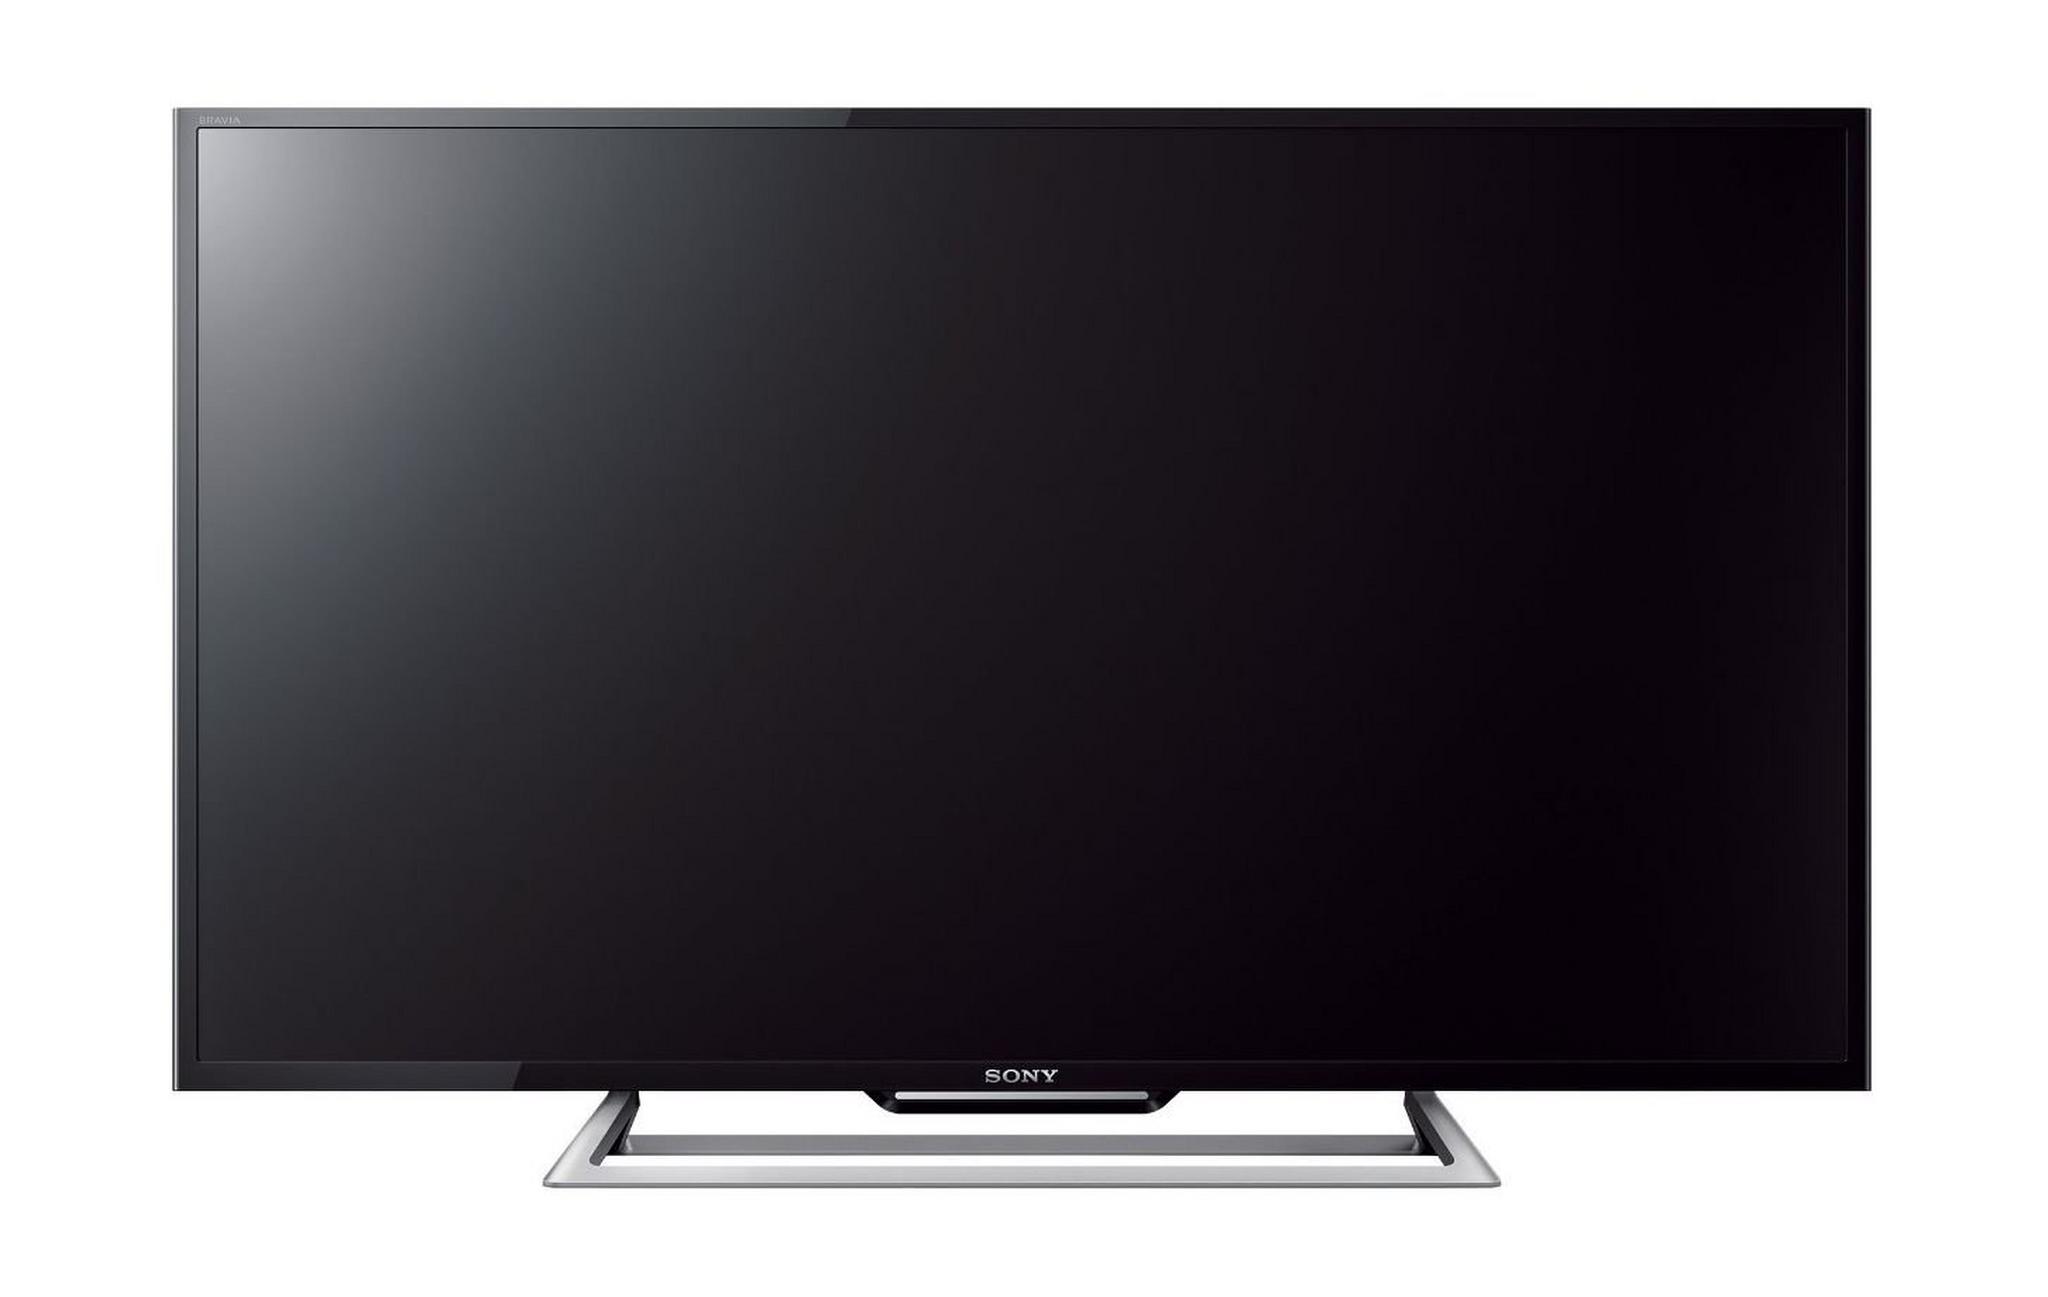 Sony Bravia 40-inch Full HD (1080p) Smart LED TV - KLV-40R562C